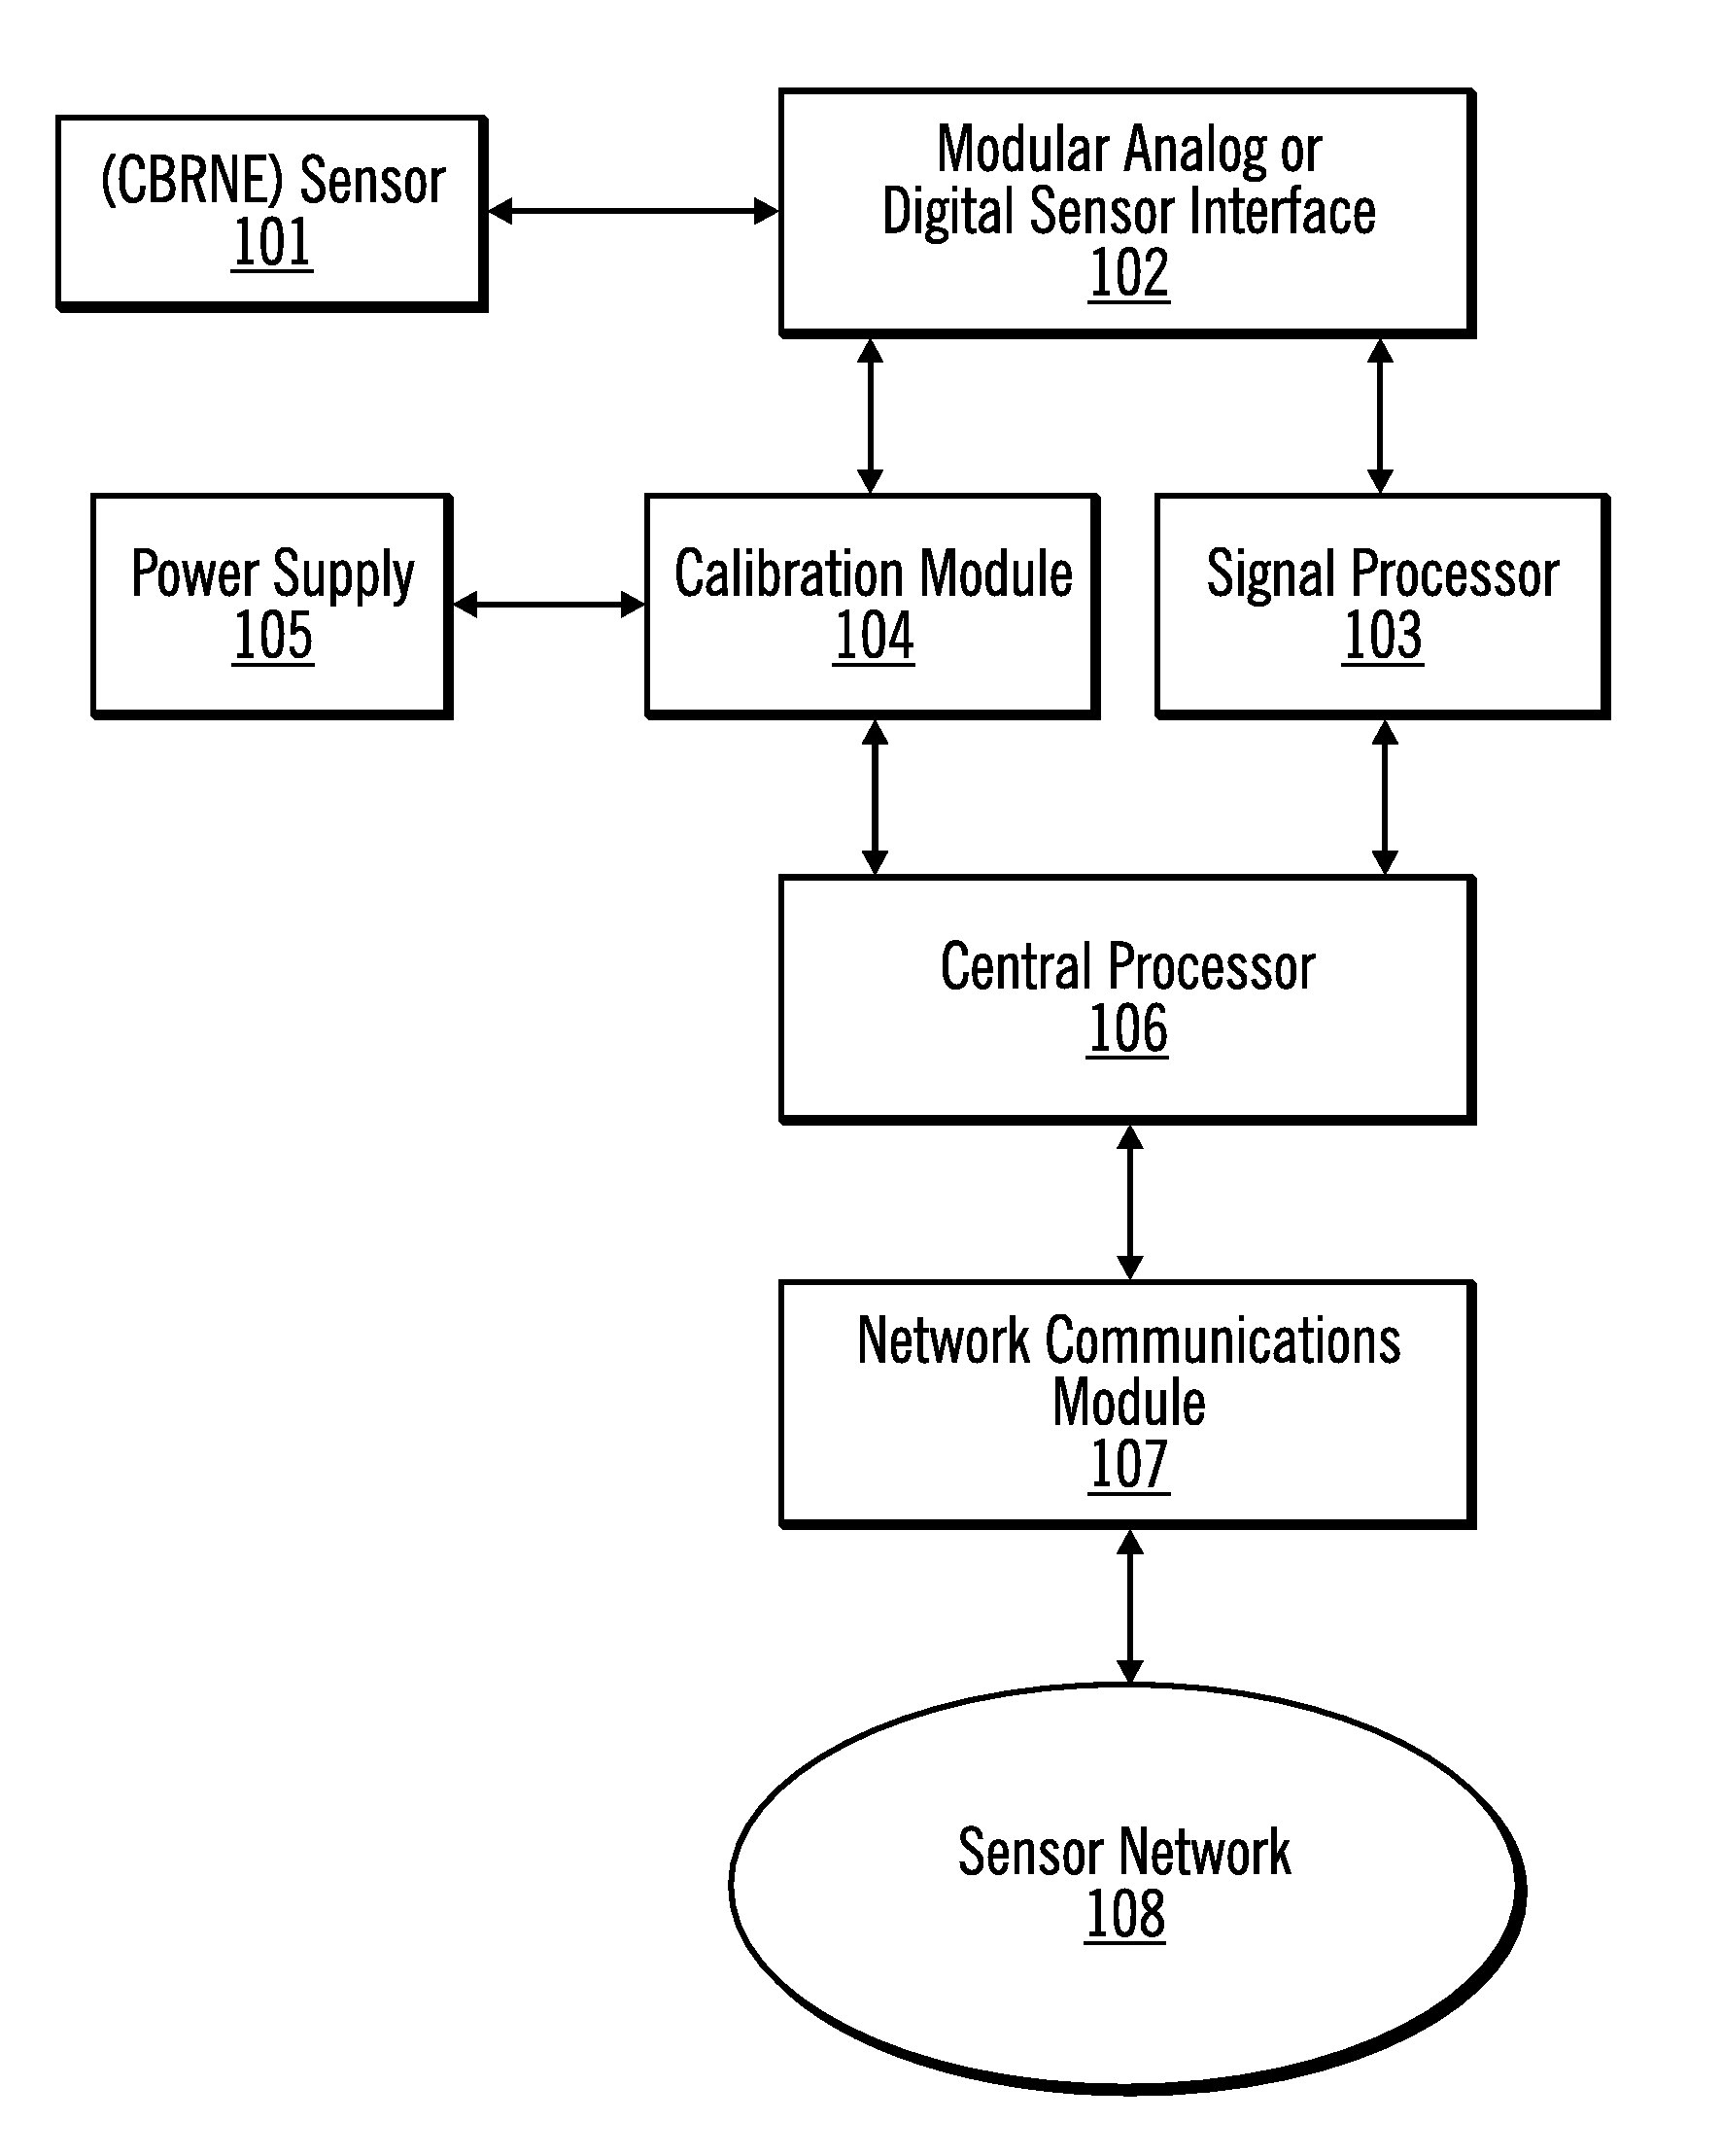 System integration module for CBRNE sensors